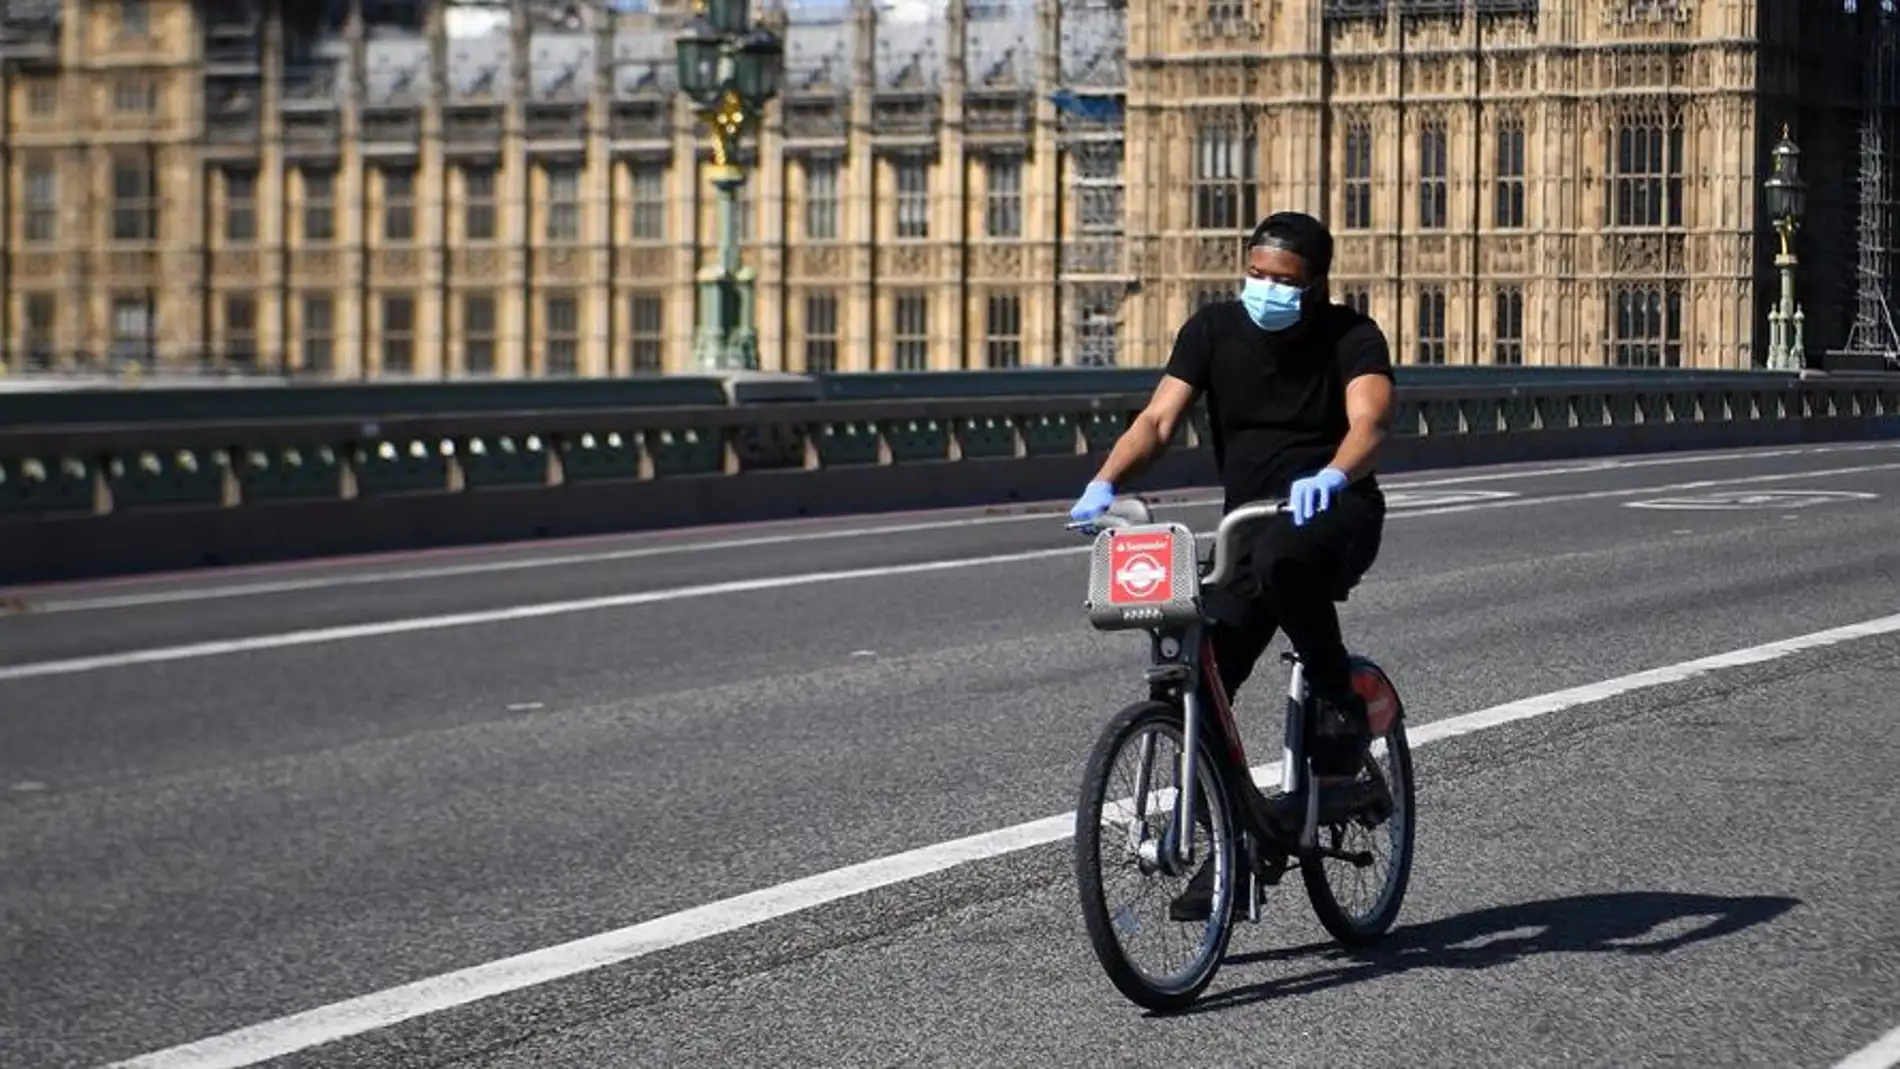 Un hombre con mascarilla circula en bicicleta frente al Parlamento británico en Londres title=